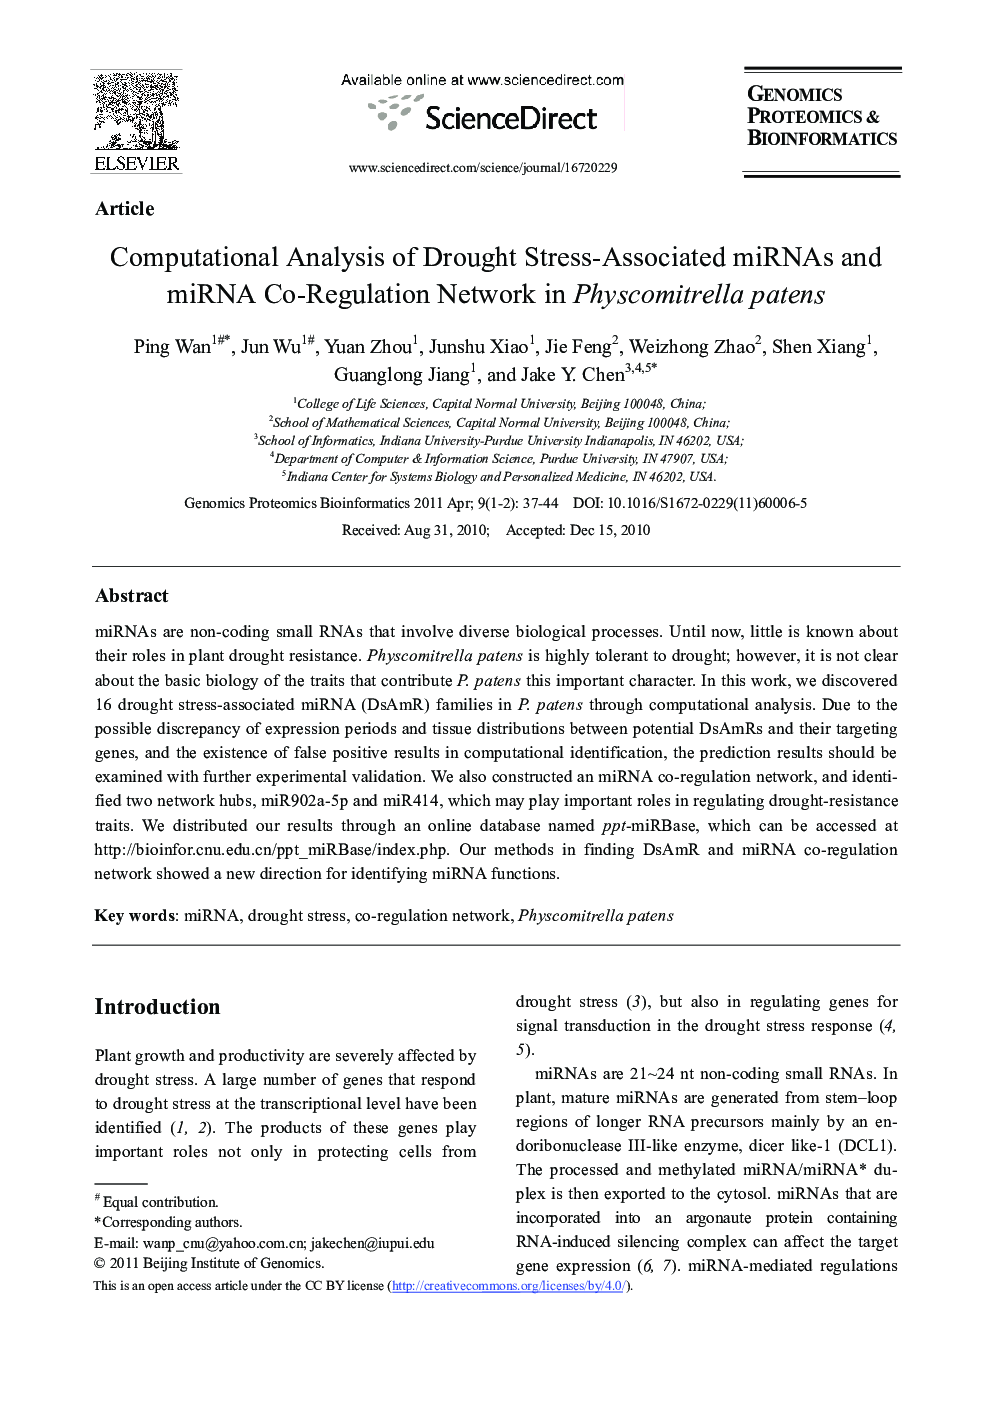 Computational Analysis of Drought Stress-Associated miRNAs and miRNA Co-Regulation Network in Physcomitrella patens